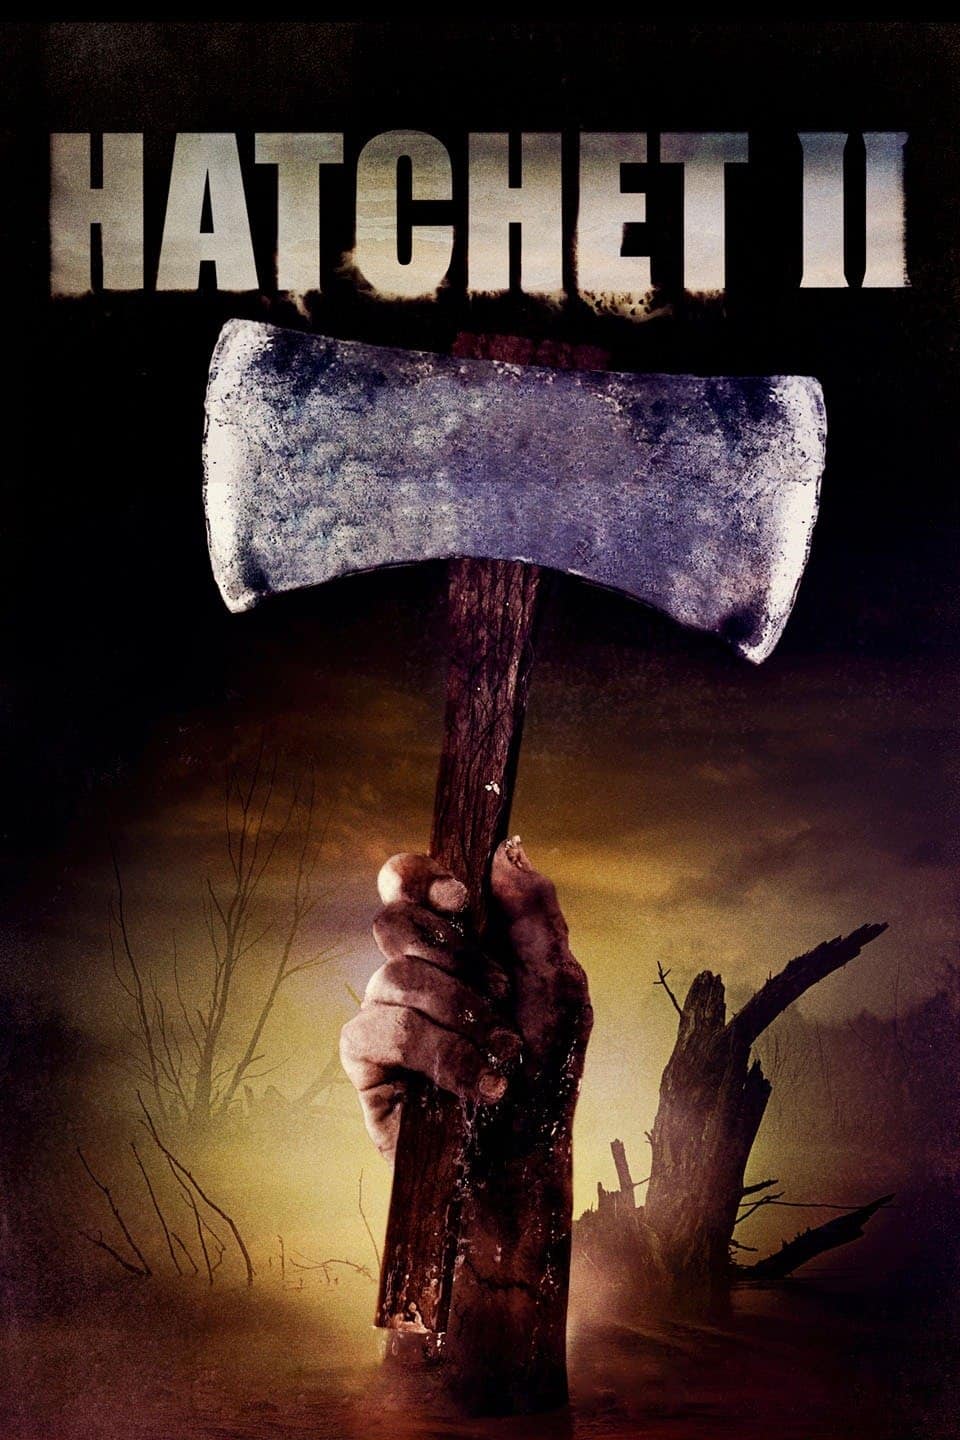 Hatchet 2 movie review